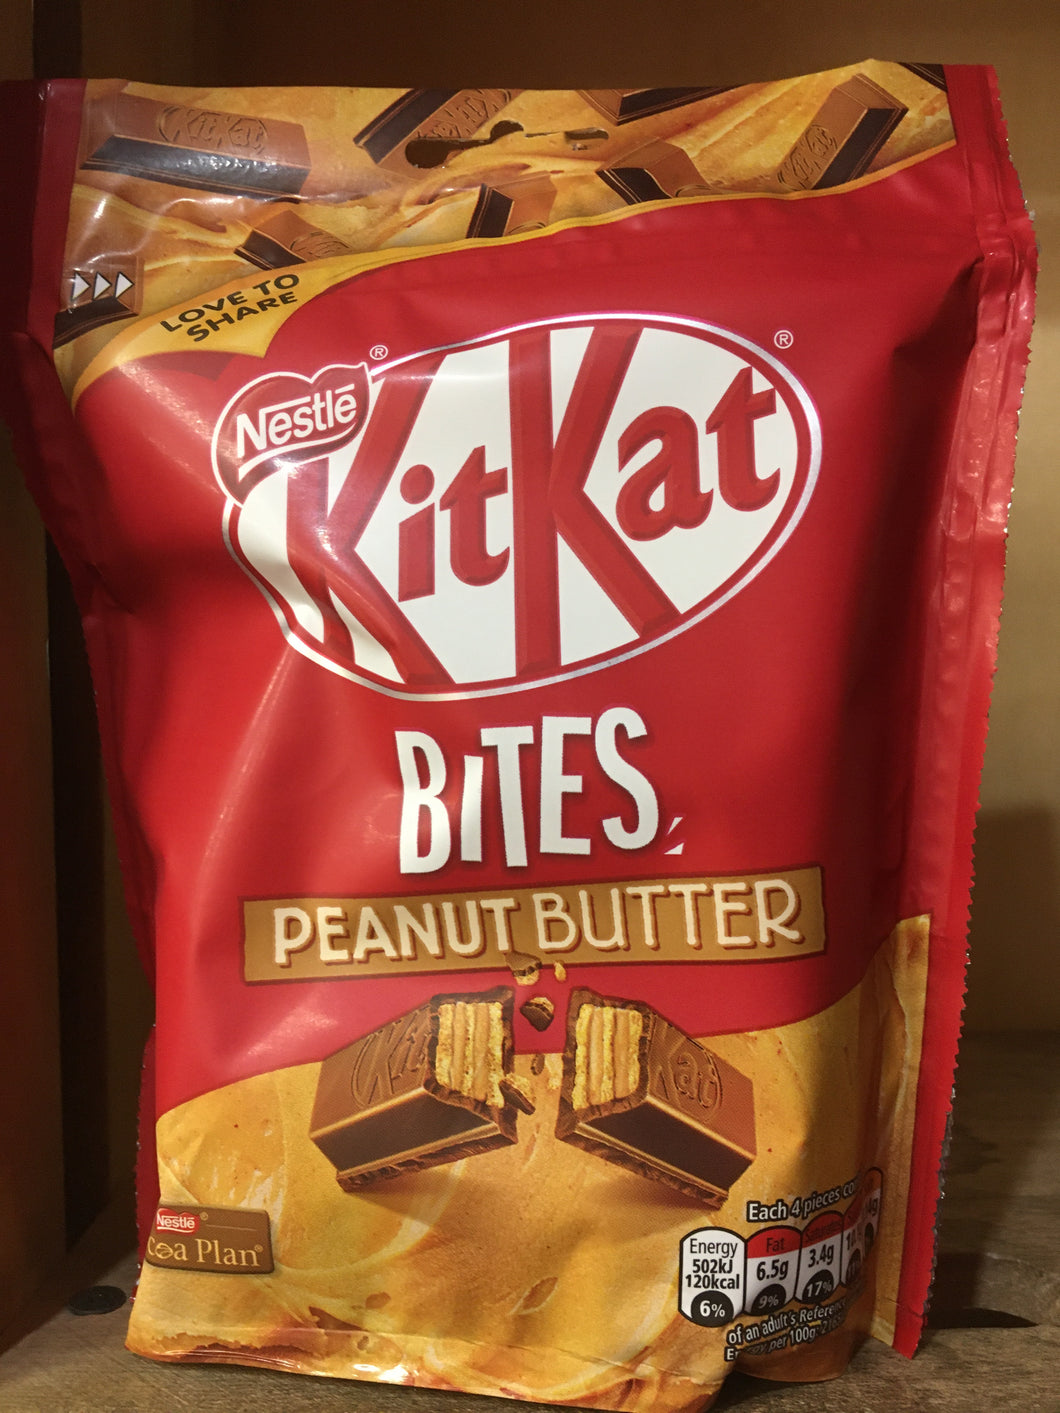 4x KitKat Bites Peanut Butter Sharing Bags (4x104g)